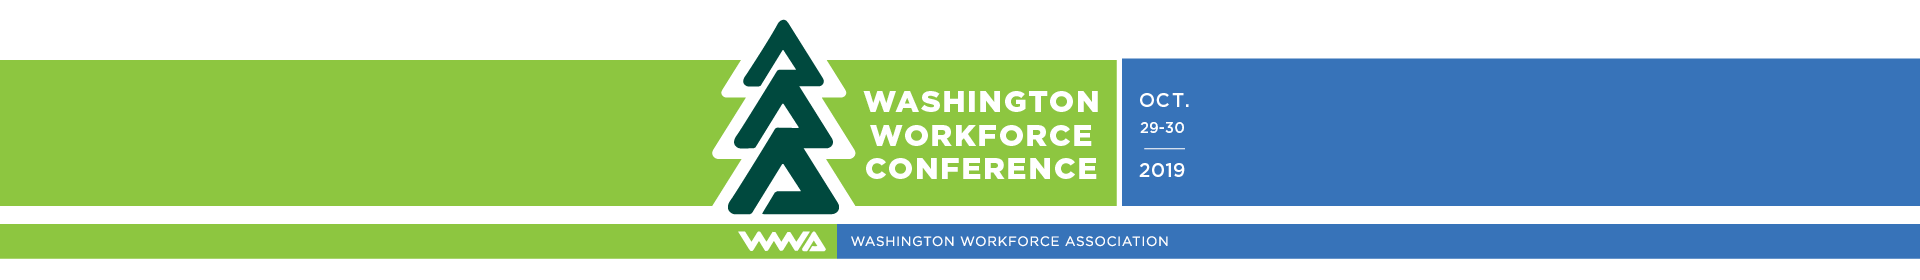 Washington Workforce Conference 2019 Event Banner